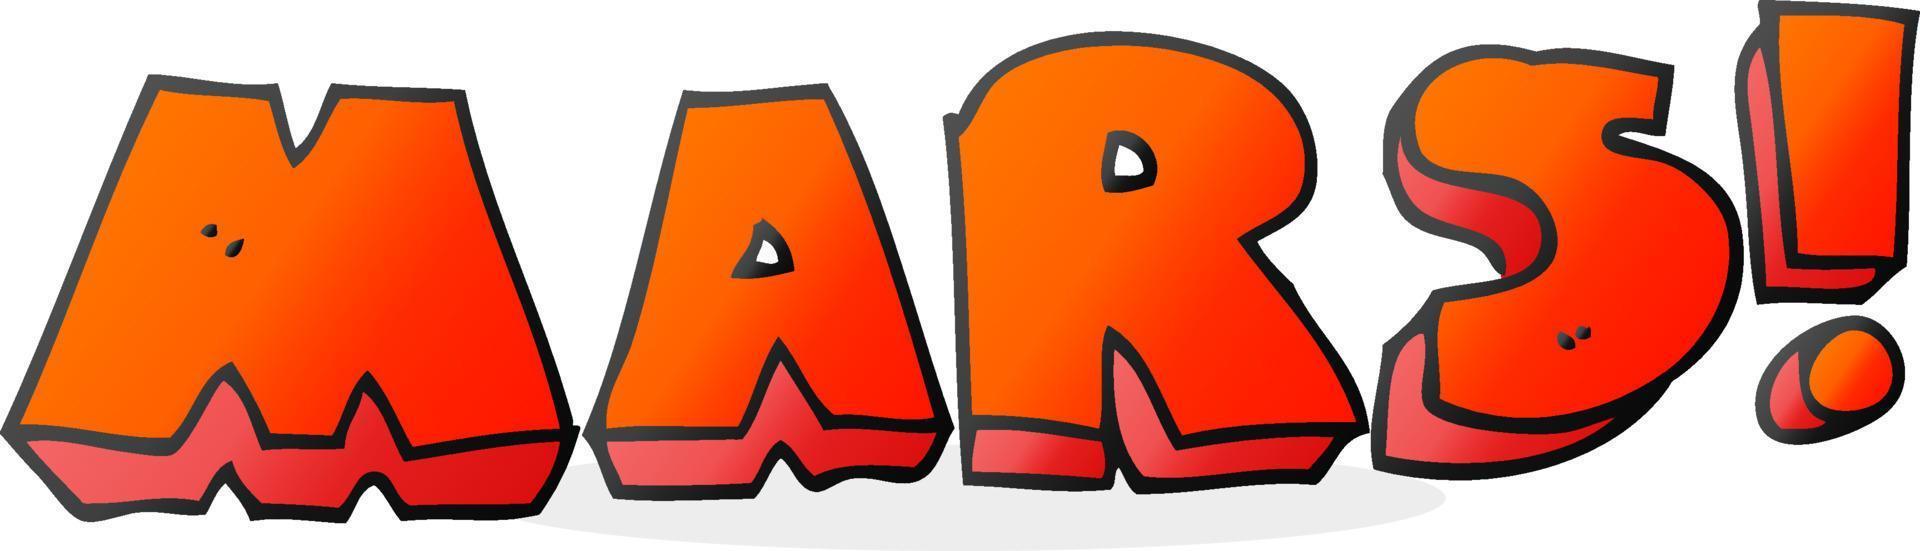 símbolo de texto de Marte de dibujos animados vector